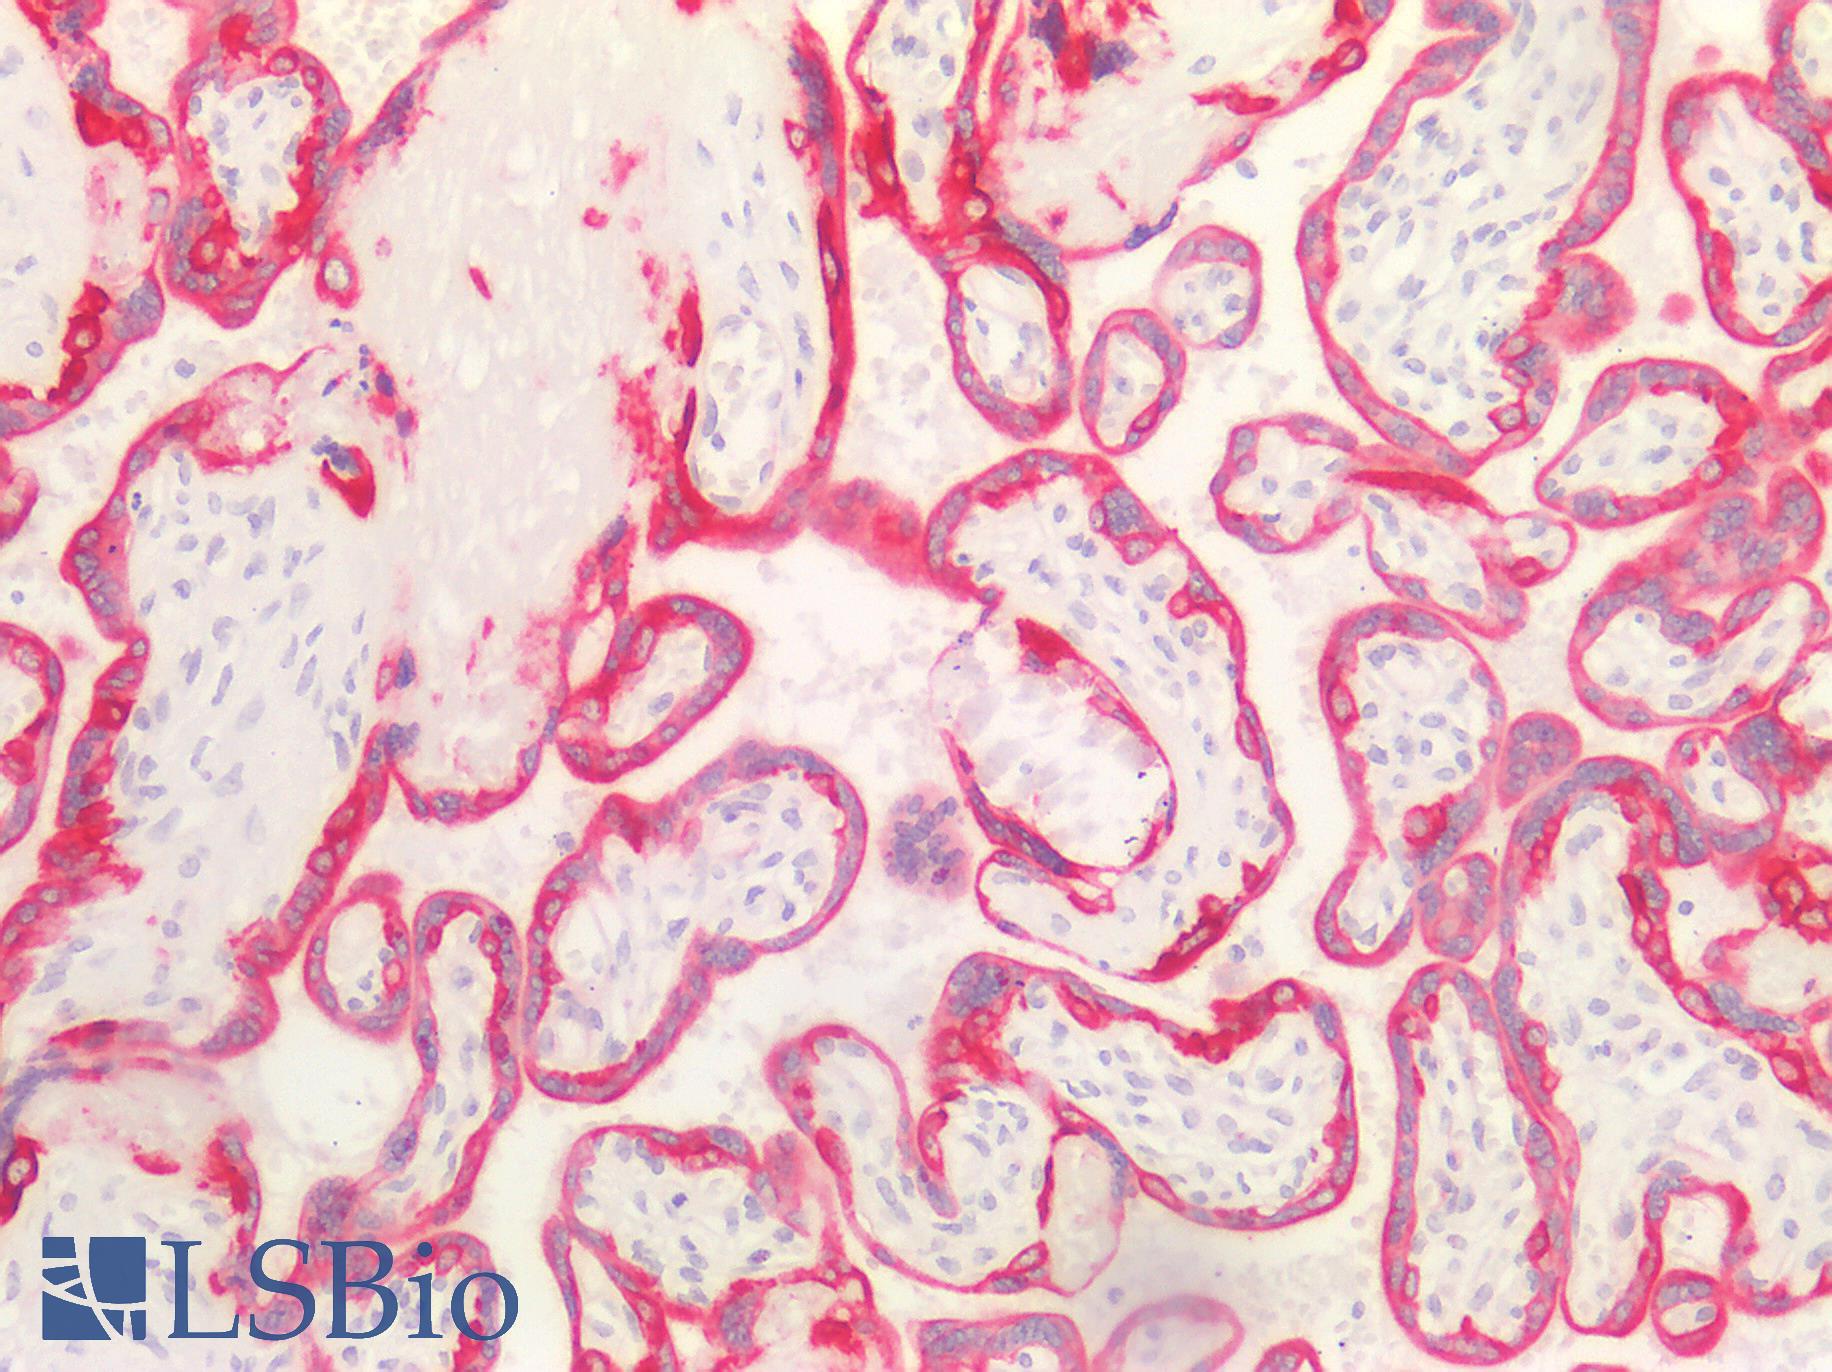 Cytokeratin 8+18 Antibody - Human Placenta: Formalin-Fixed, Paraffin-Embedded (FFPE)